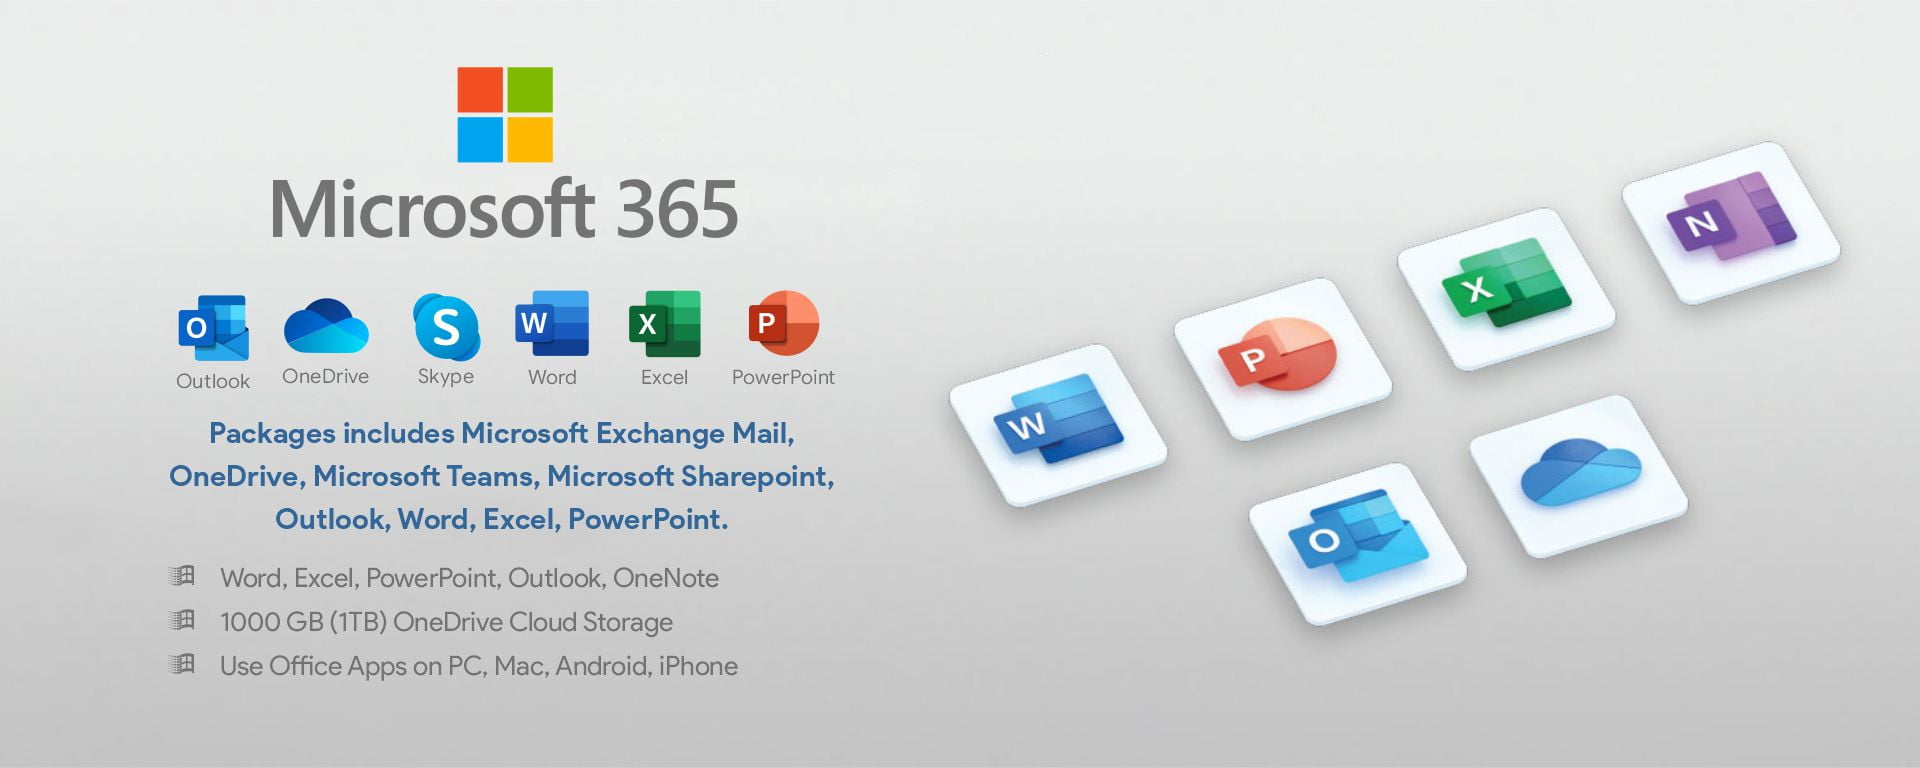 Microsoft 365 Slide